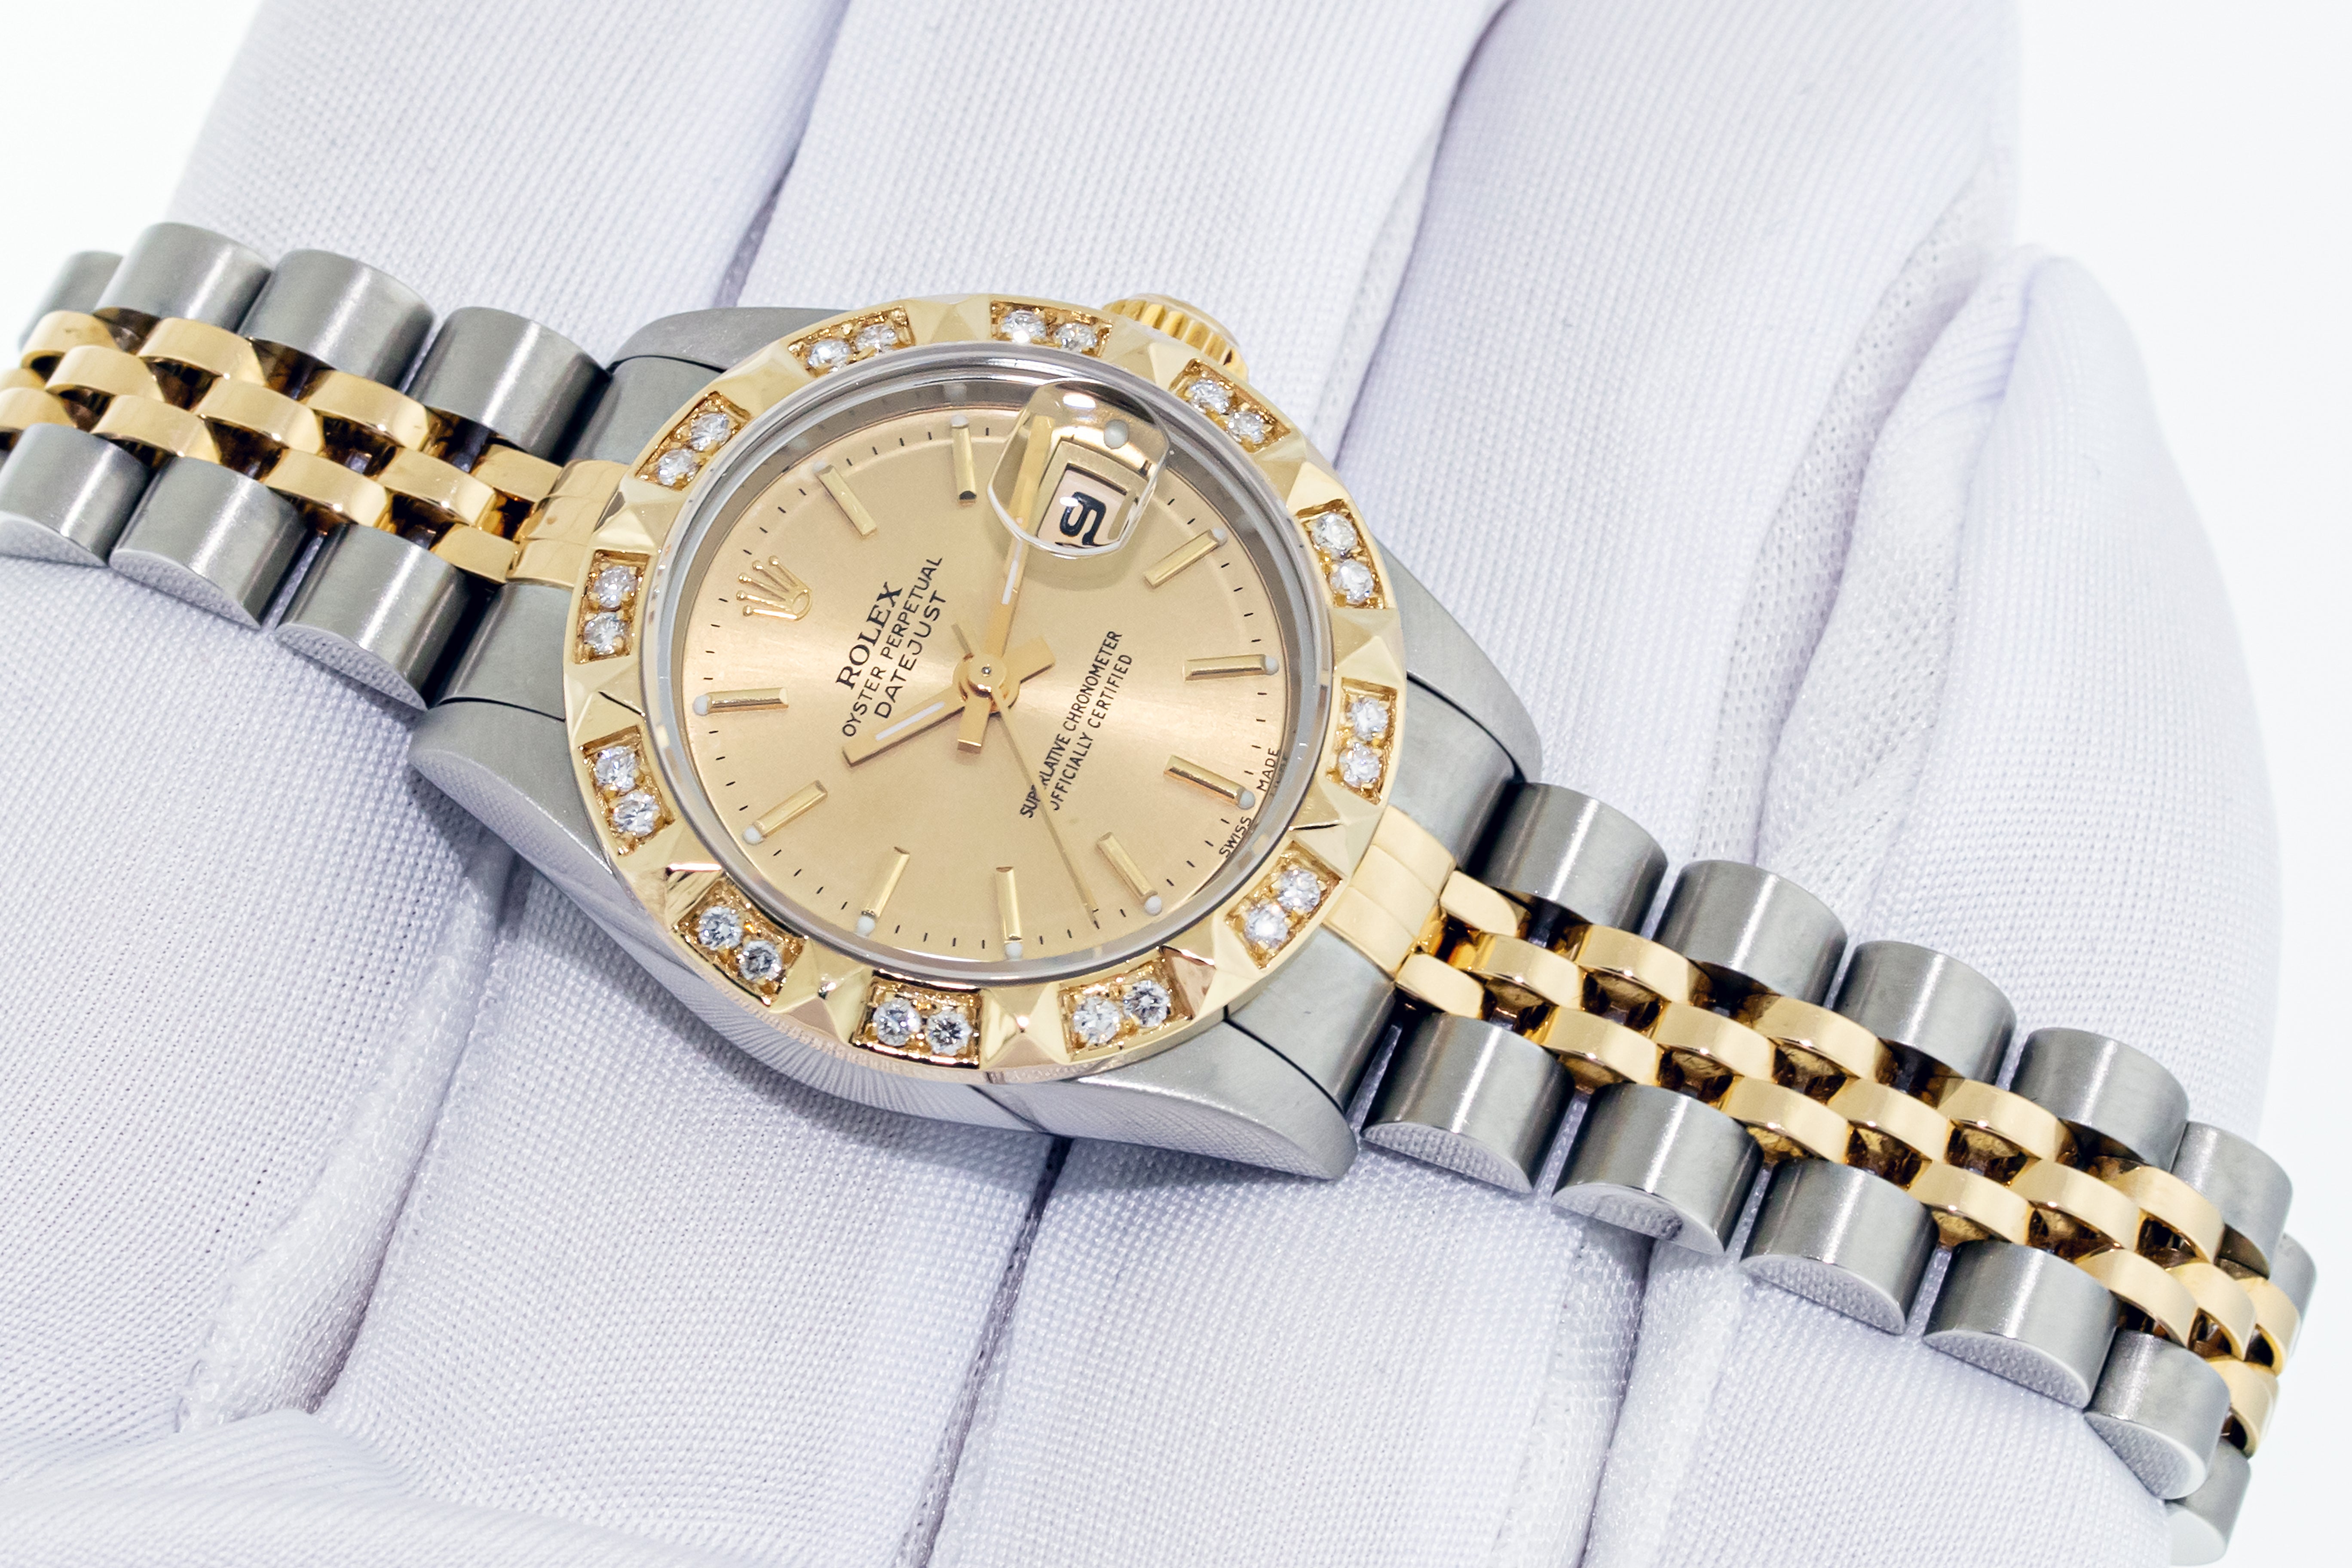 Rolex Lady Datejust Watch 79173 Steel and 18K Gold Champagne Diamond Bezel Watch